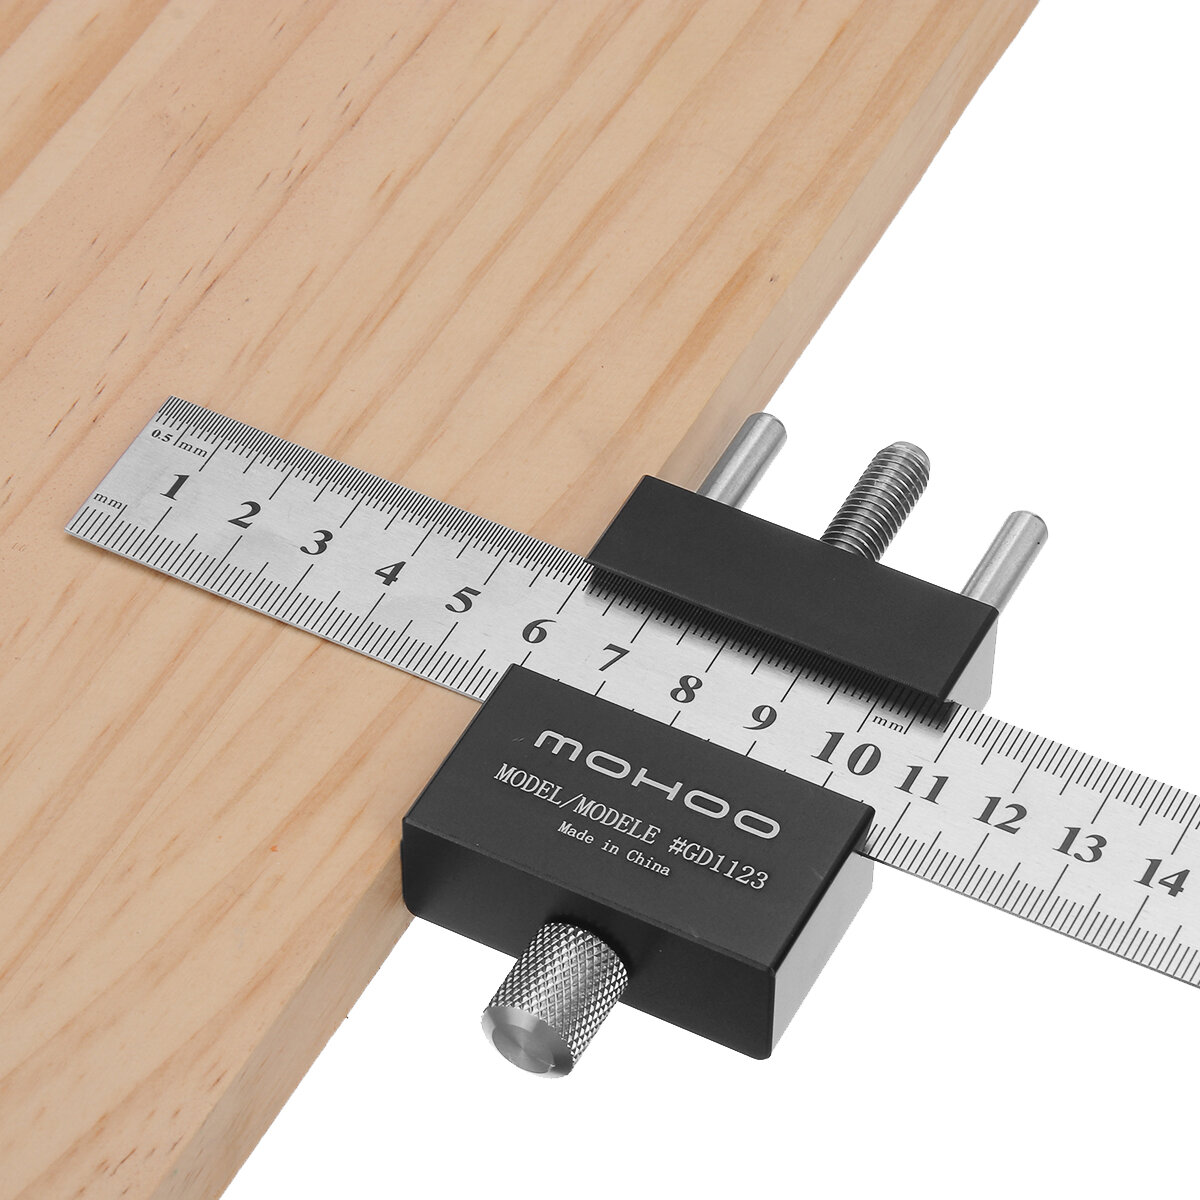 Mohoo Steel Ruler Positioning Block Angle Scriber Line za